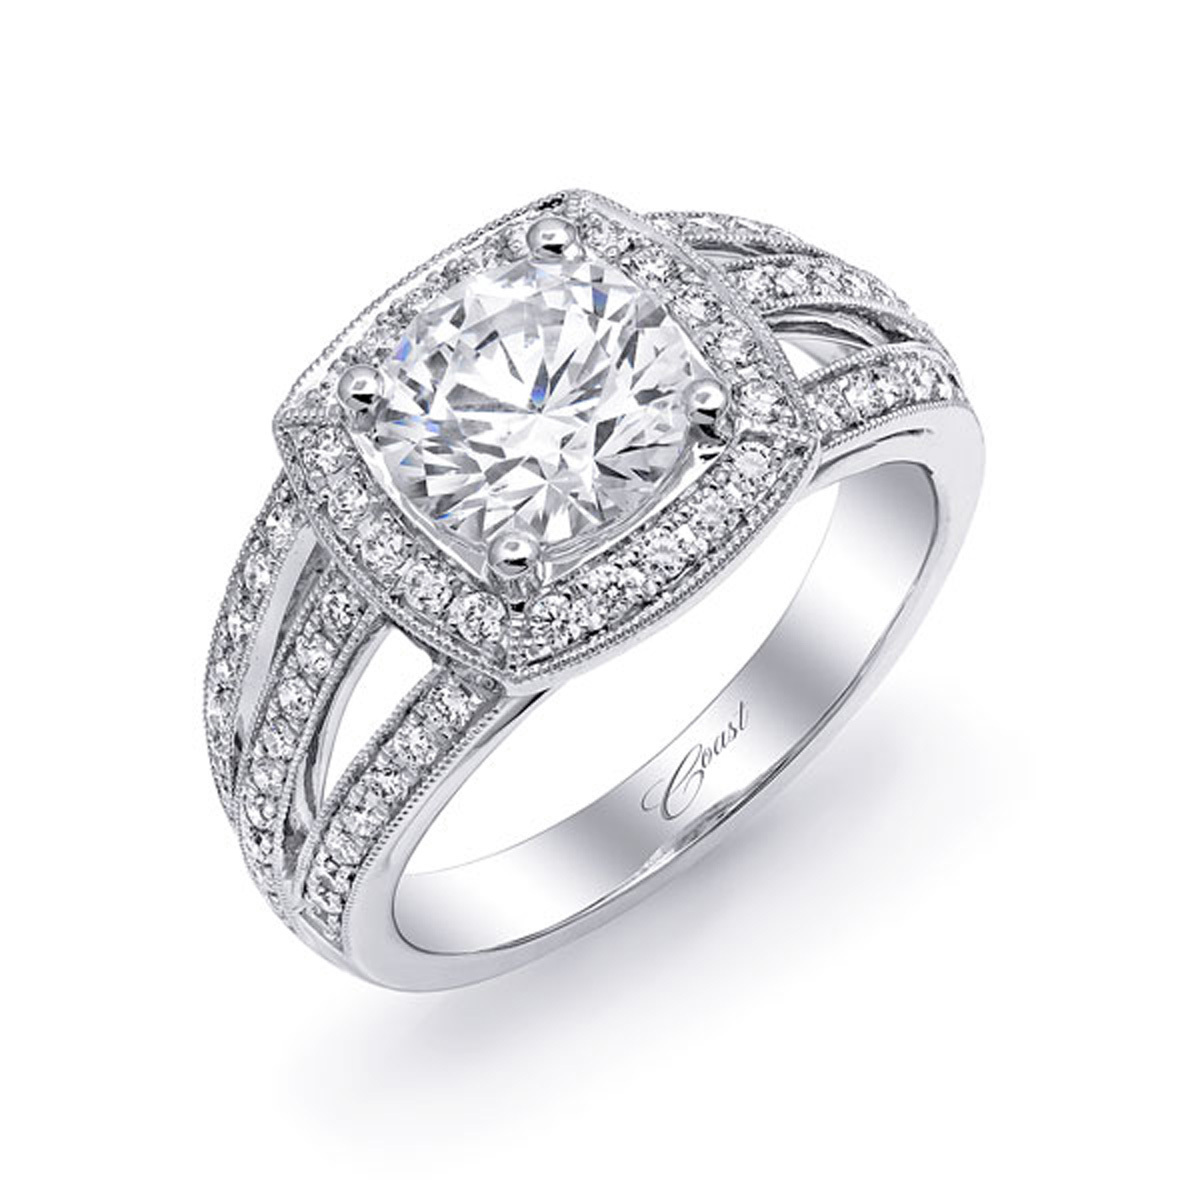 Engagement ring